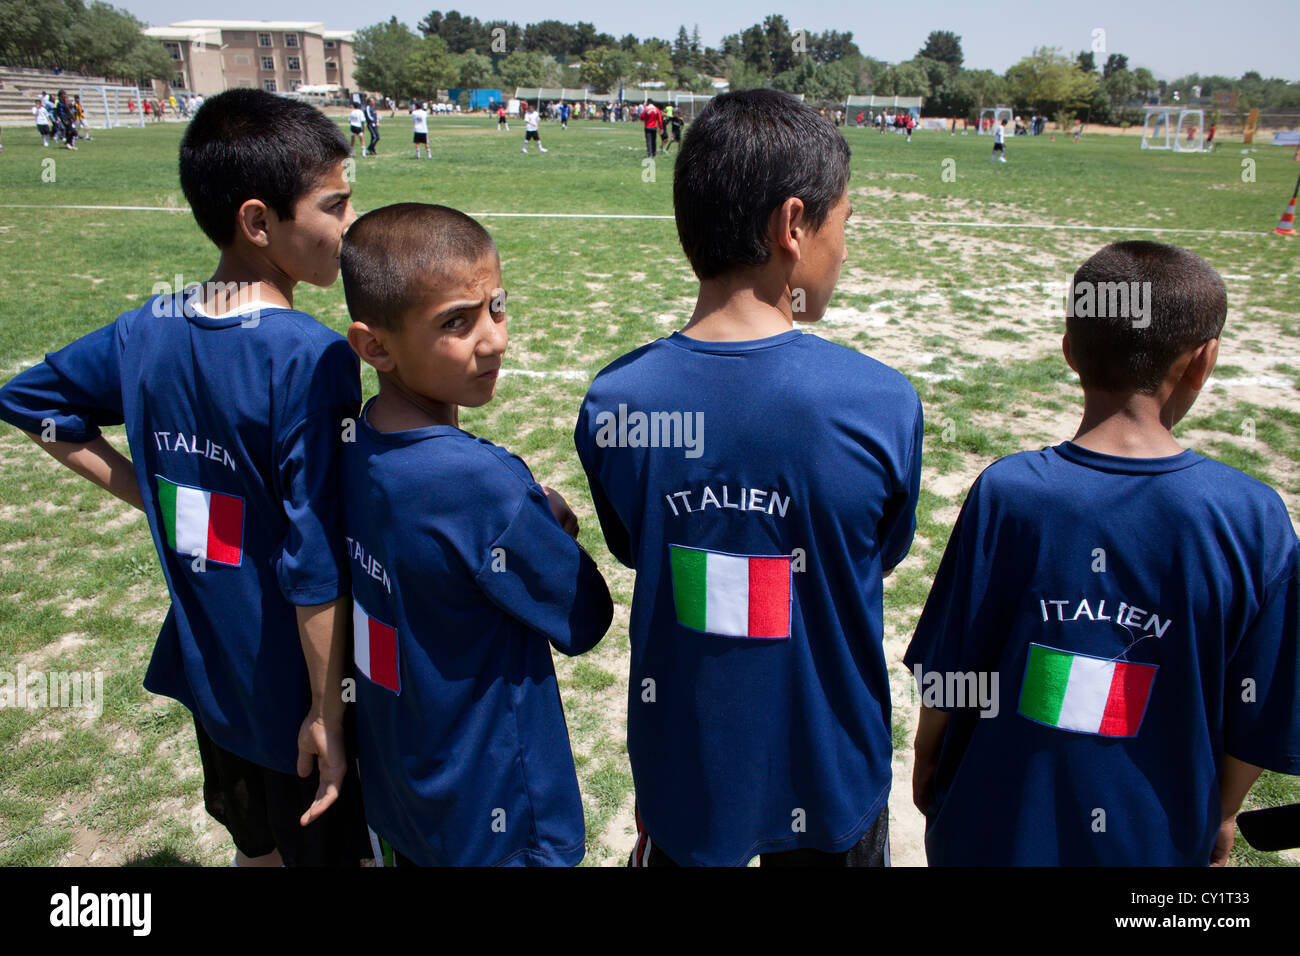 Kinder-Spieler spielt Fußball-Feld-Turnier Stockfoto